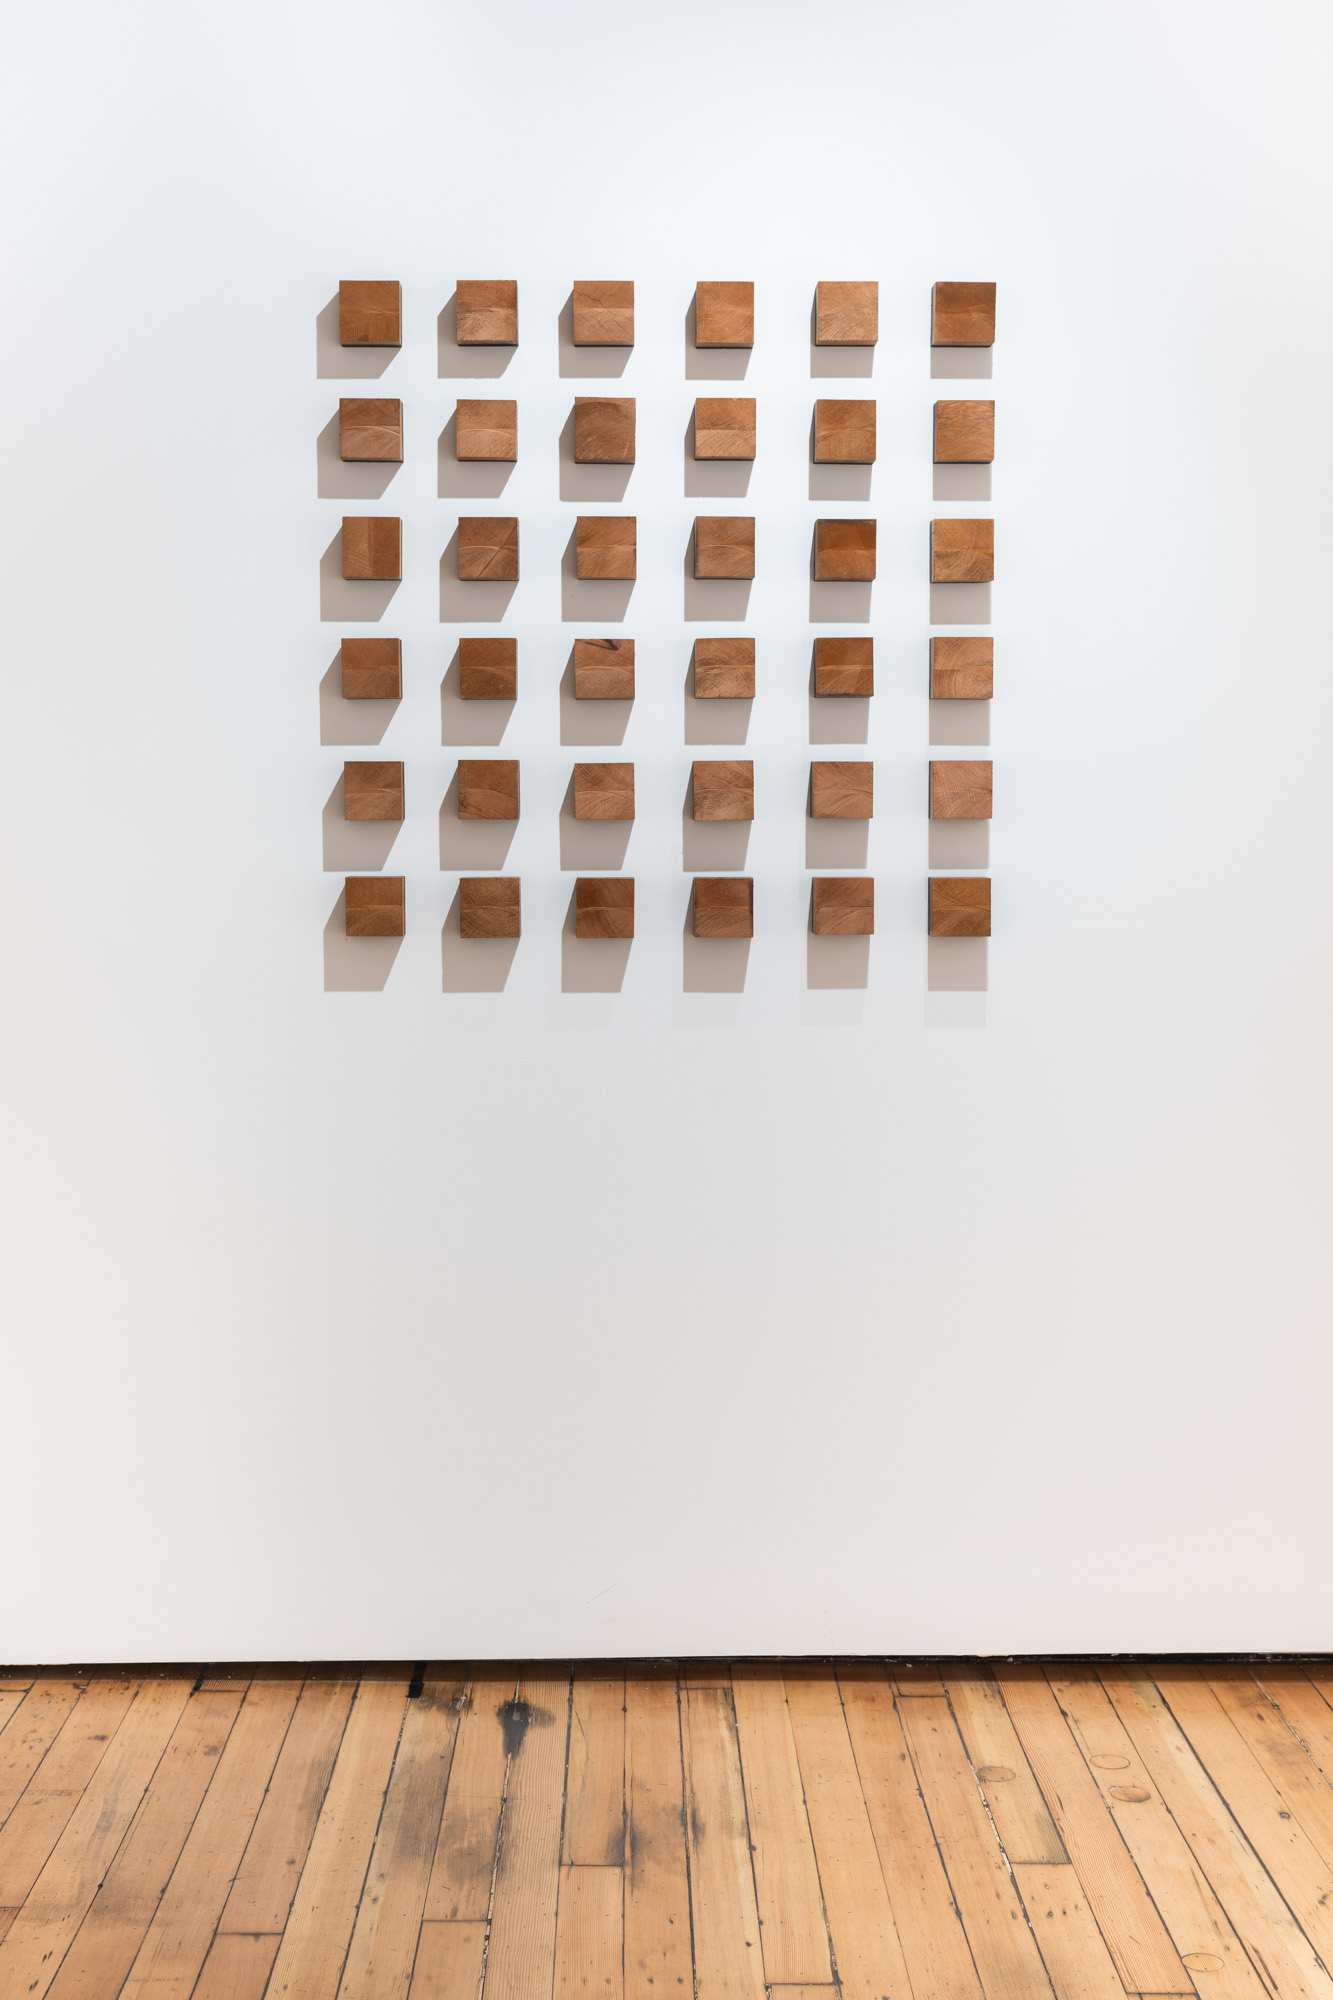 a grid of redwood blocks